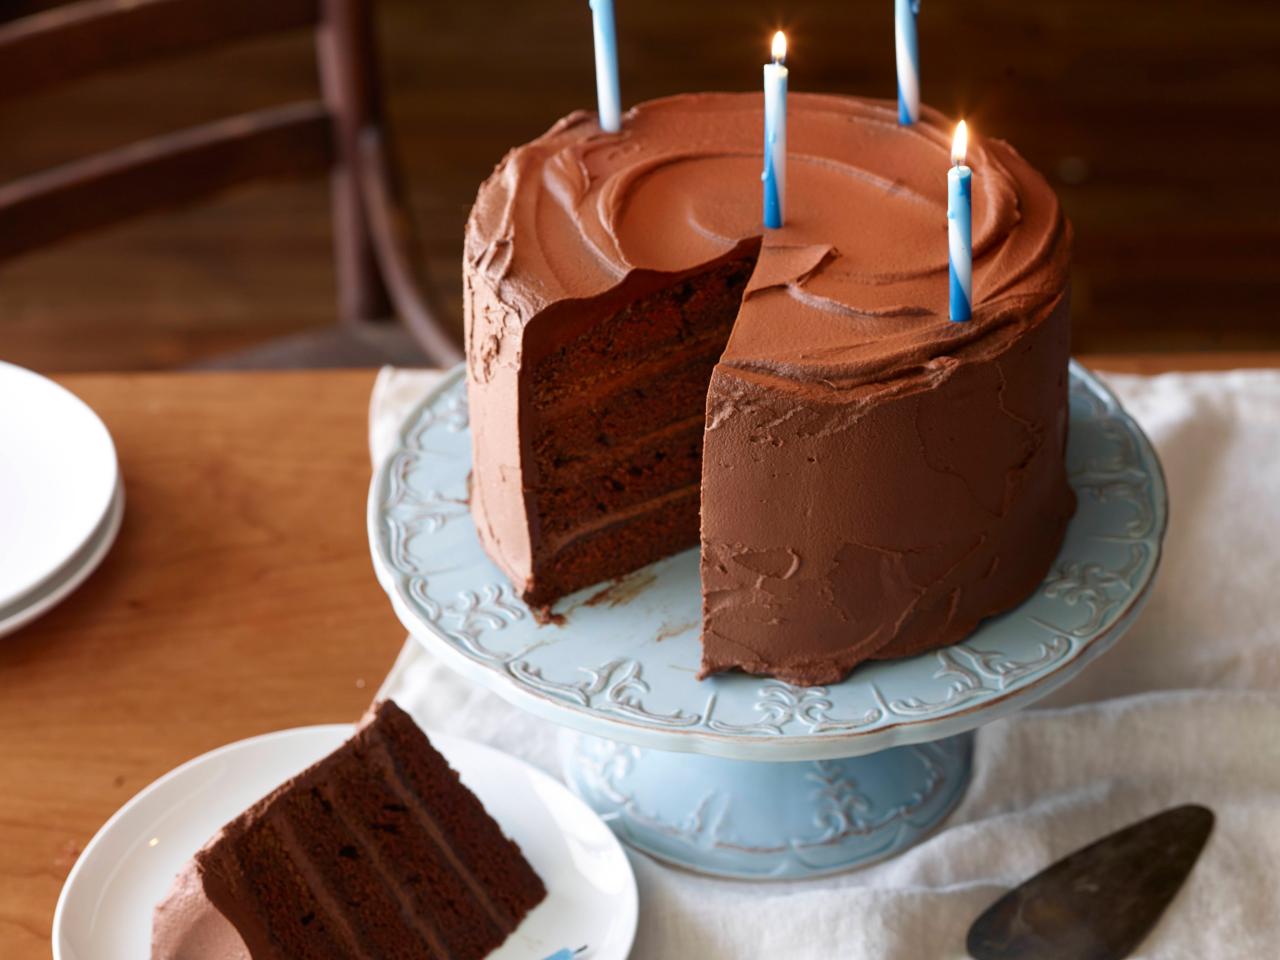 https://food.fnr.sndimg.com/content/dam/images/food/fullset/2012/4/27/1/WU0208H_big-chocolate-birthday-cake_s4x3.jpg.rend.hgtvcom.1280.960.suffix/1396654574671.jpeg